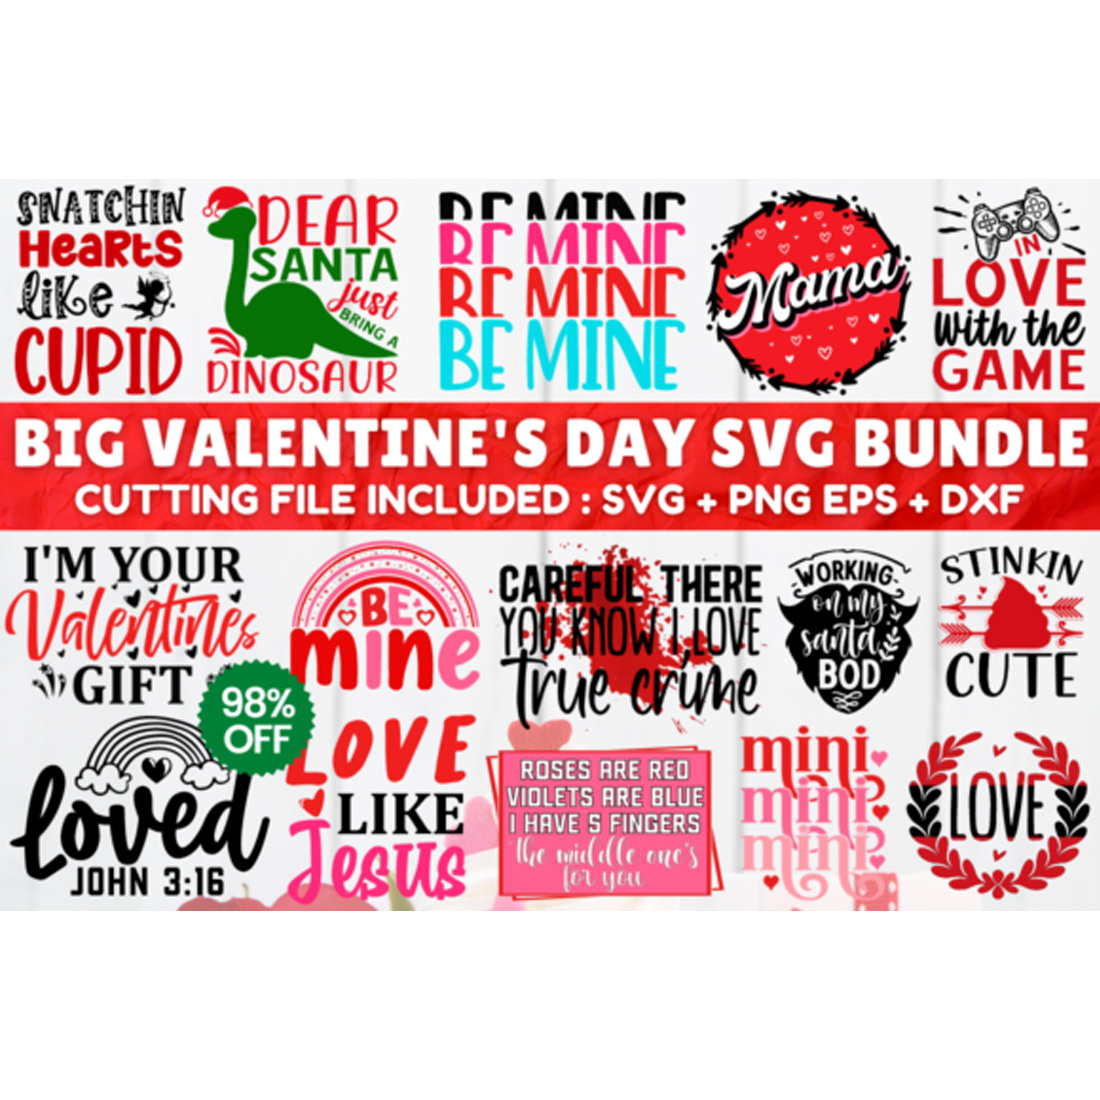 Big Valentine Day SVG Bundle main cover.